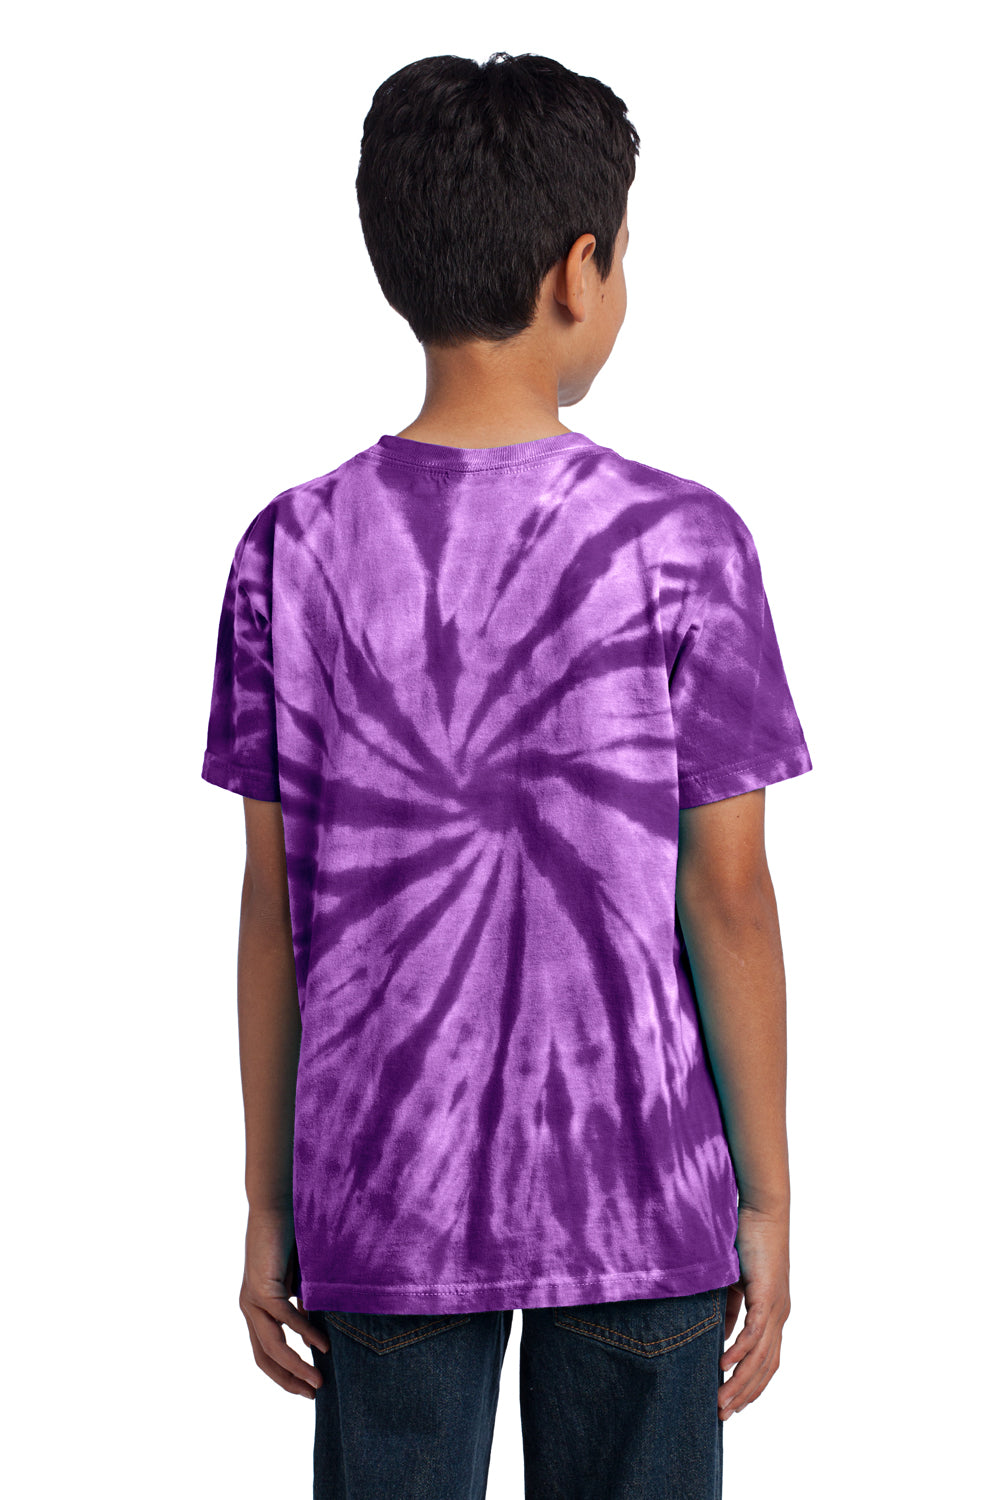 Port & Company PC147Y Youth Tie-Dye Short Sleeve Crewneck T-Shirt Purple Back